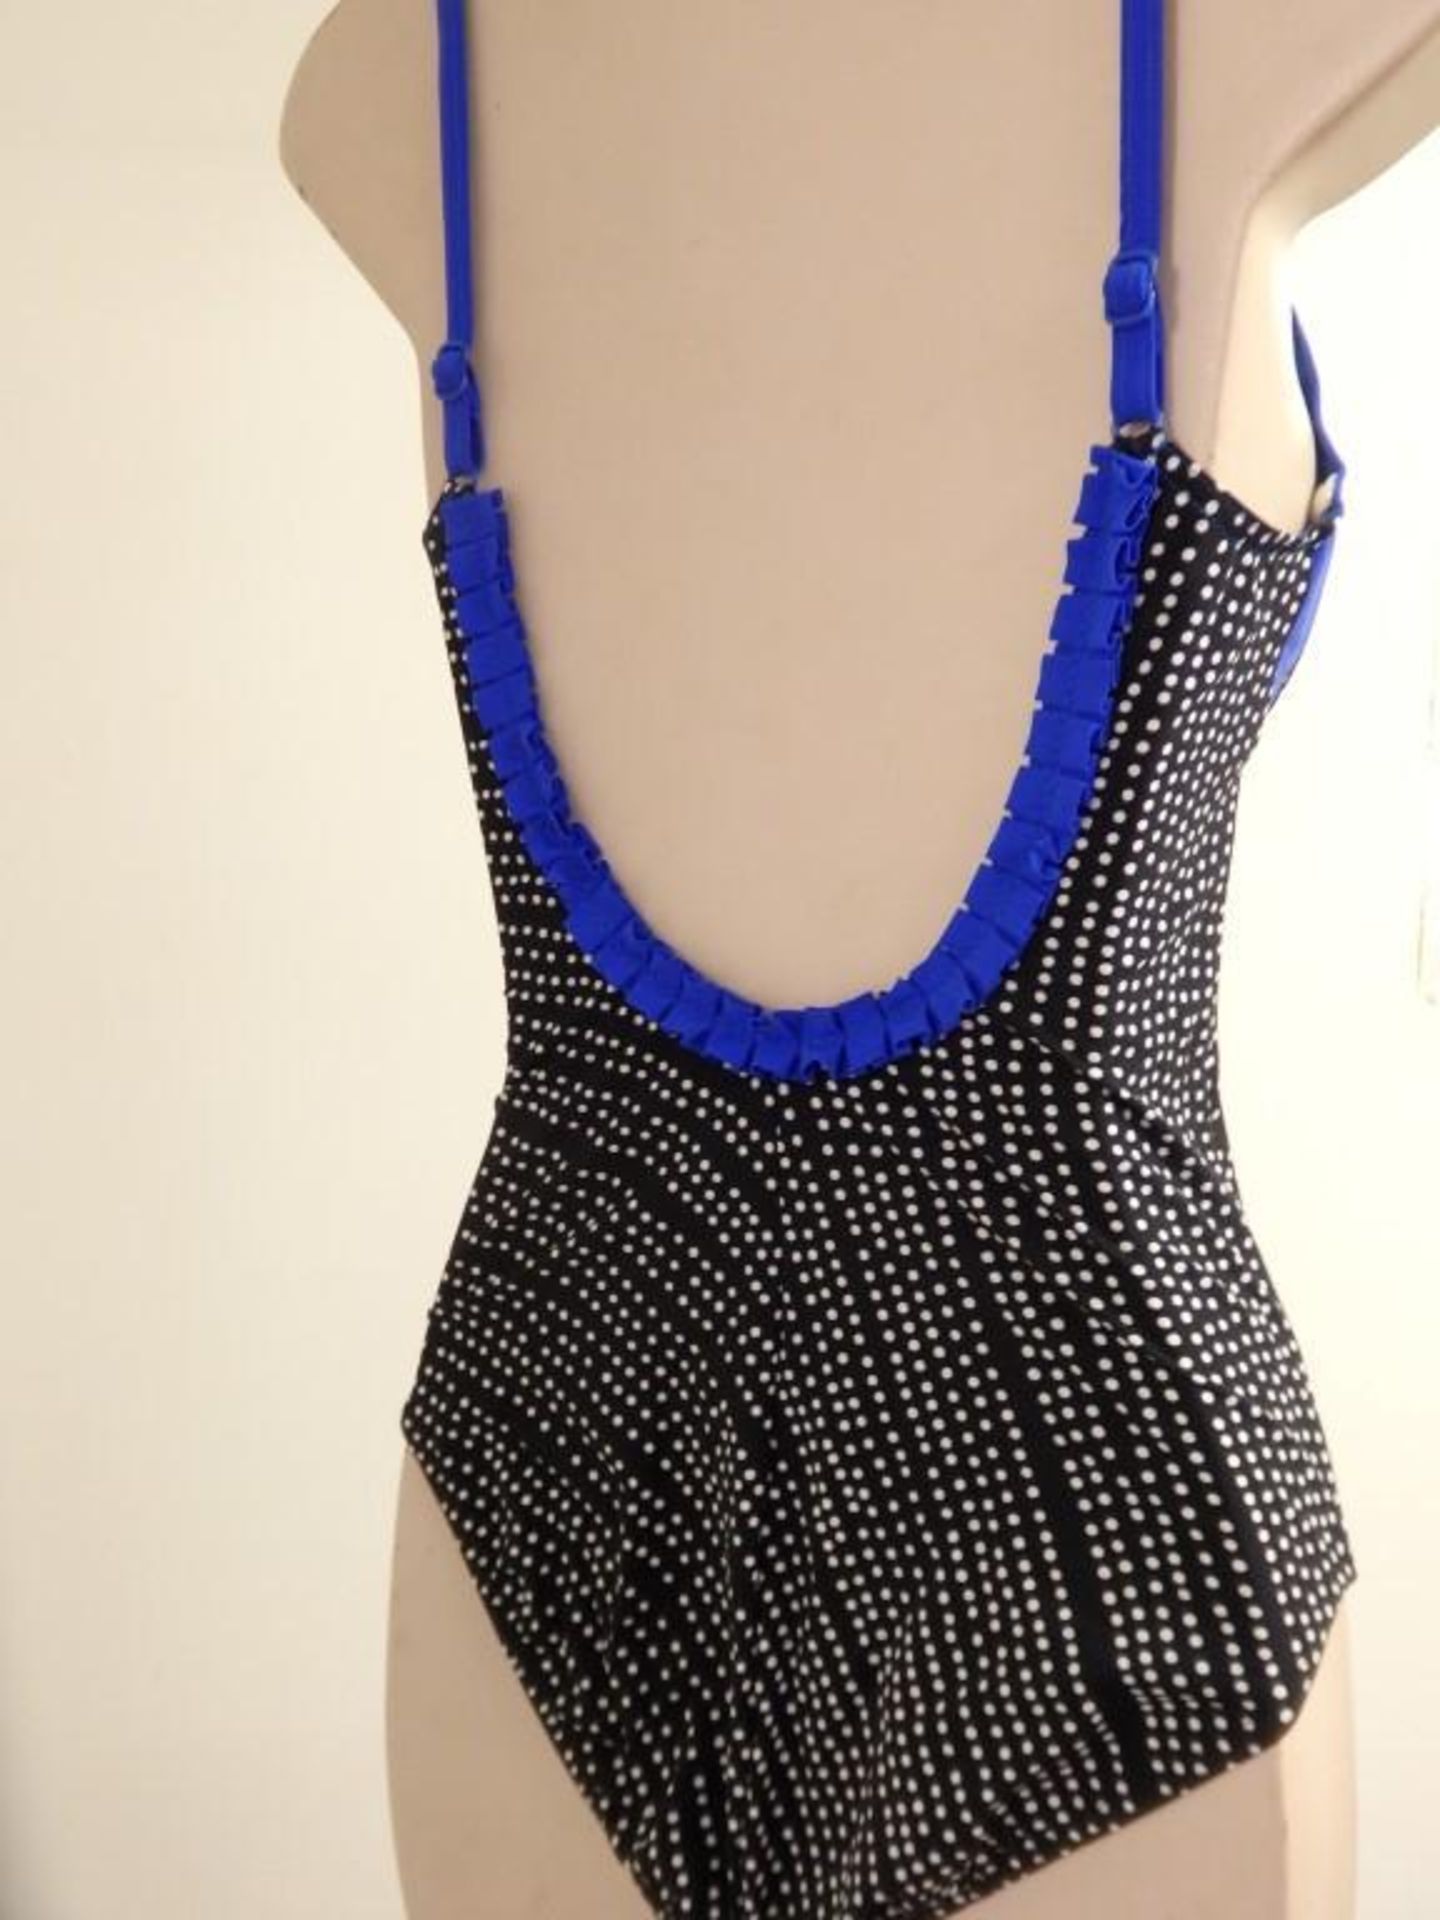 1 x Rasurel - Black Polka dot with royal blue trim & frill Tobago Swimsuit - B21039 - Size 2C - UK 3 - Image 8 of 8